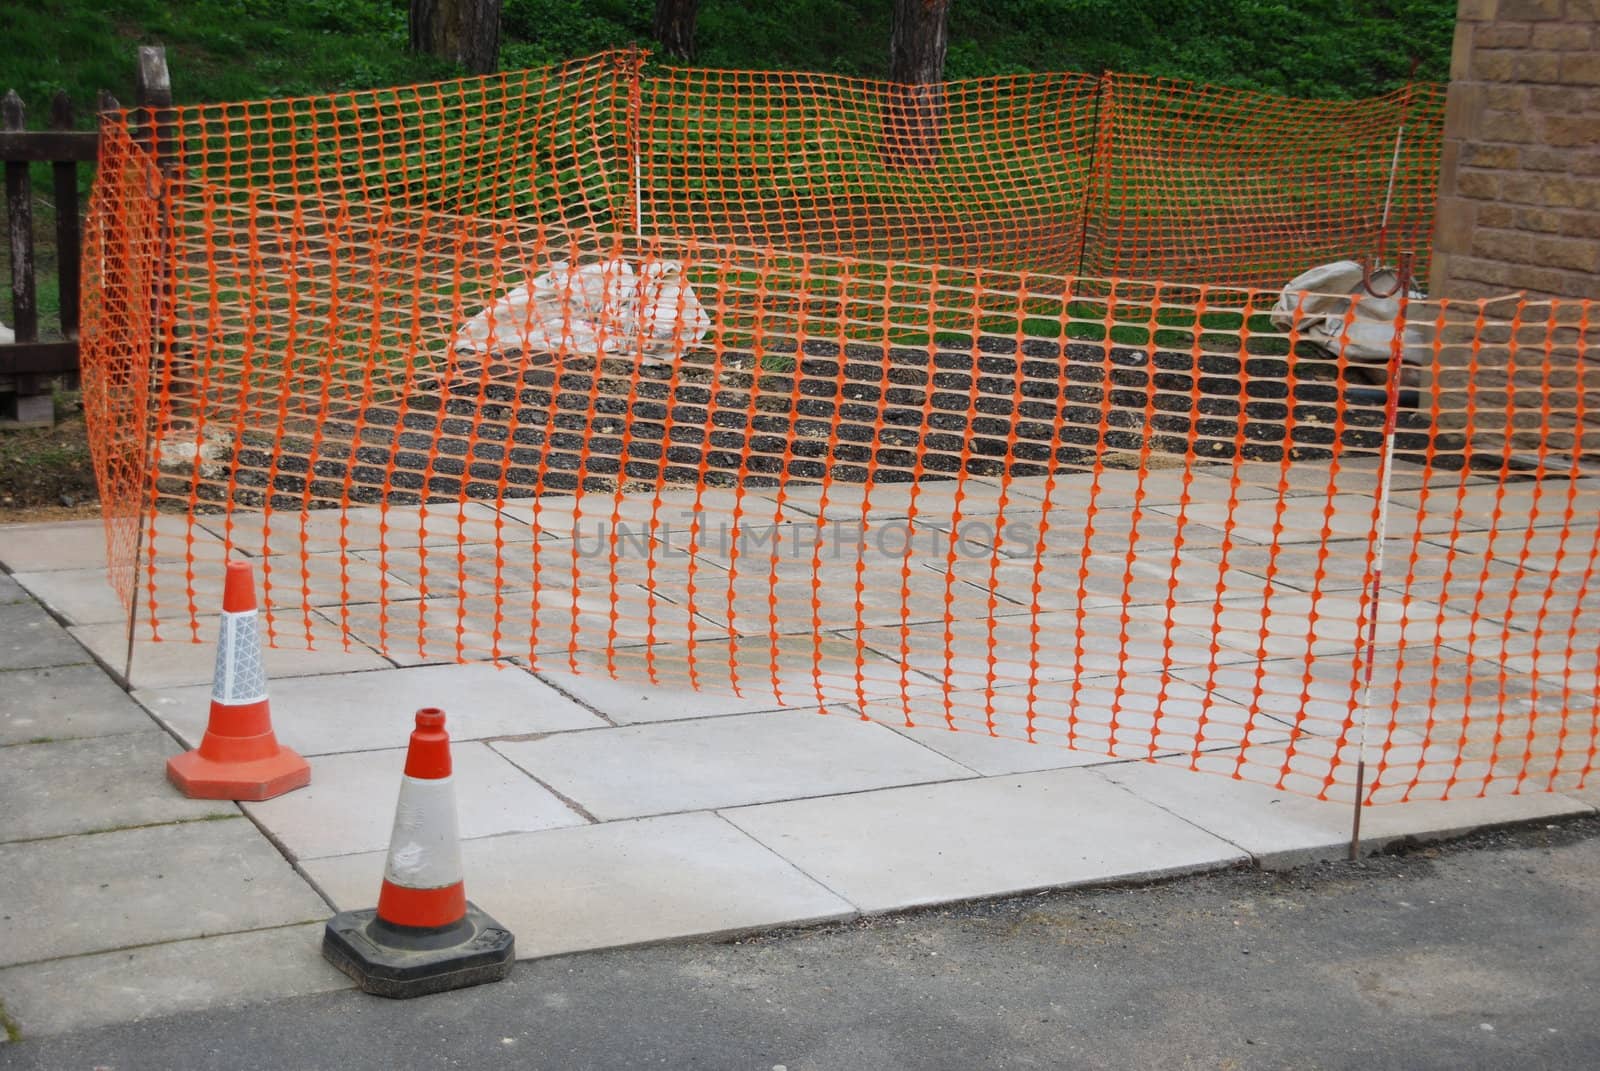 sidewalk construction site with orange cones and delimitation area